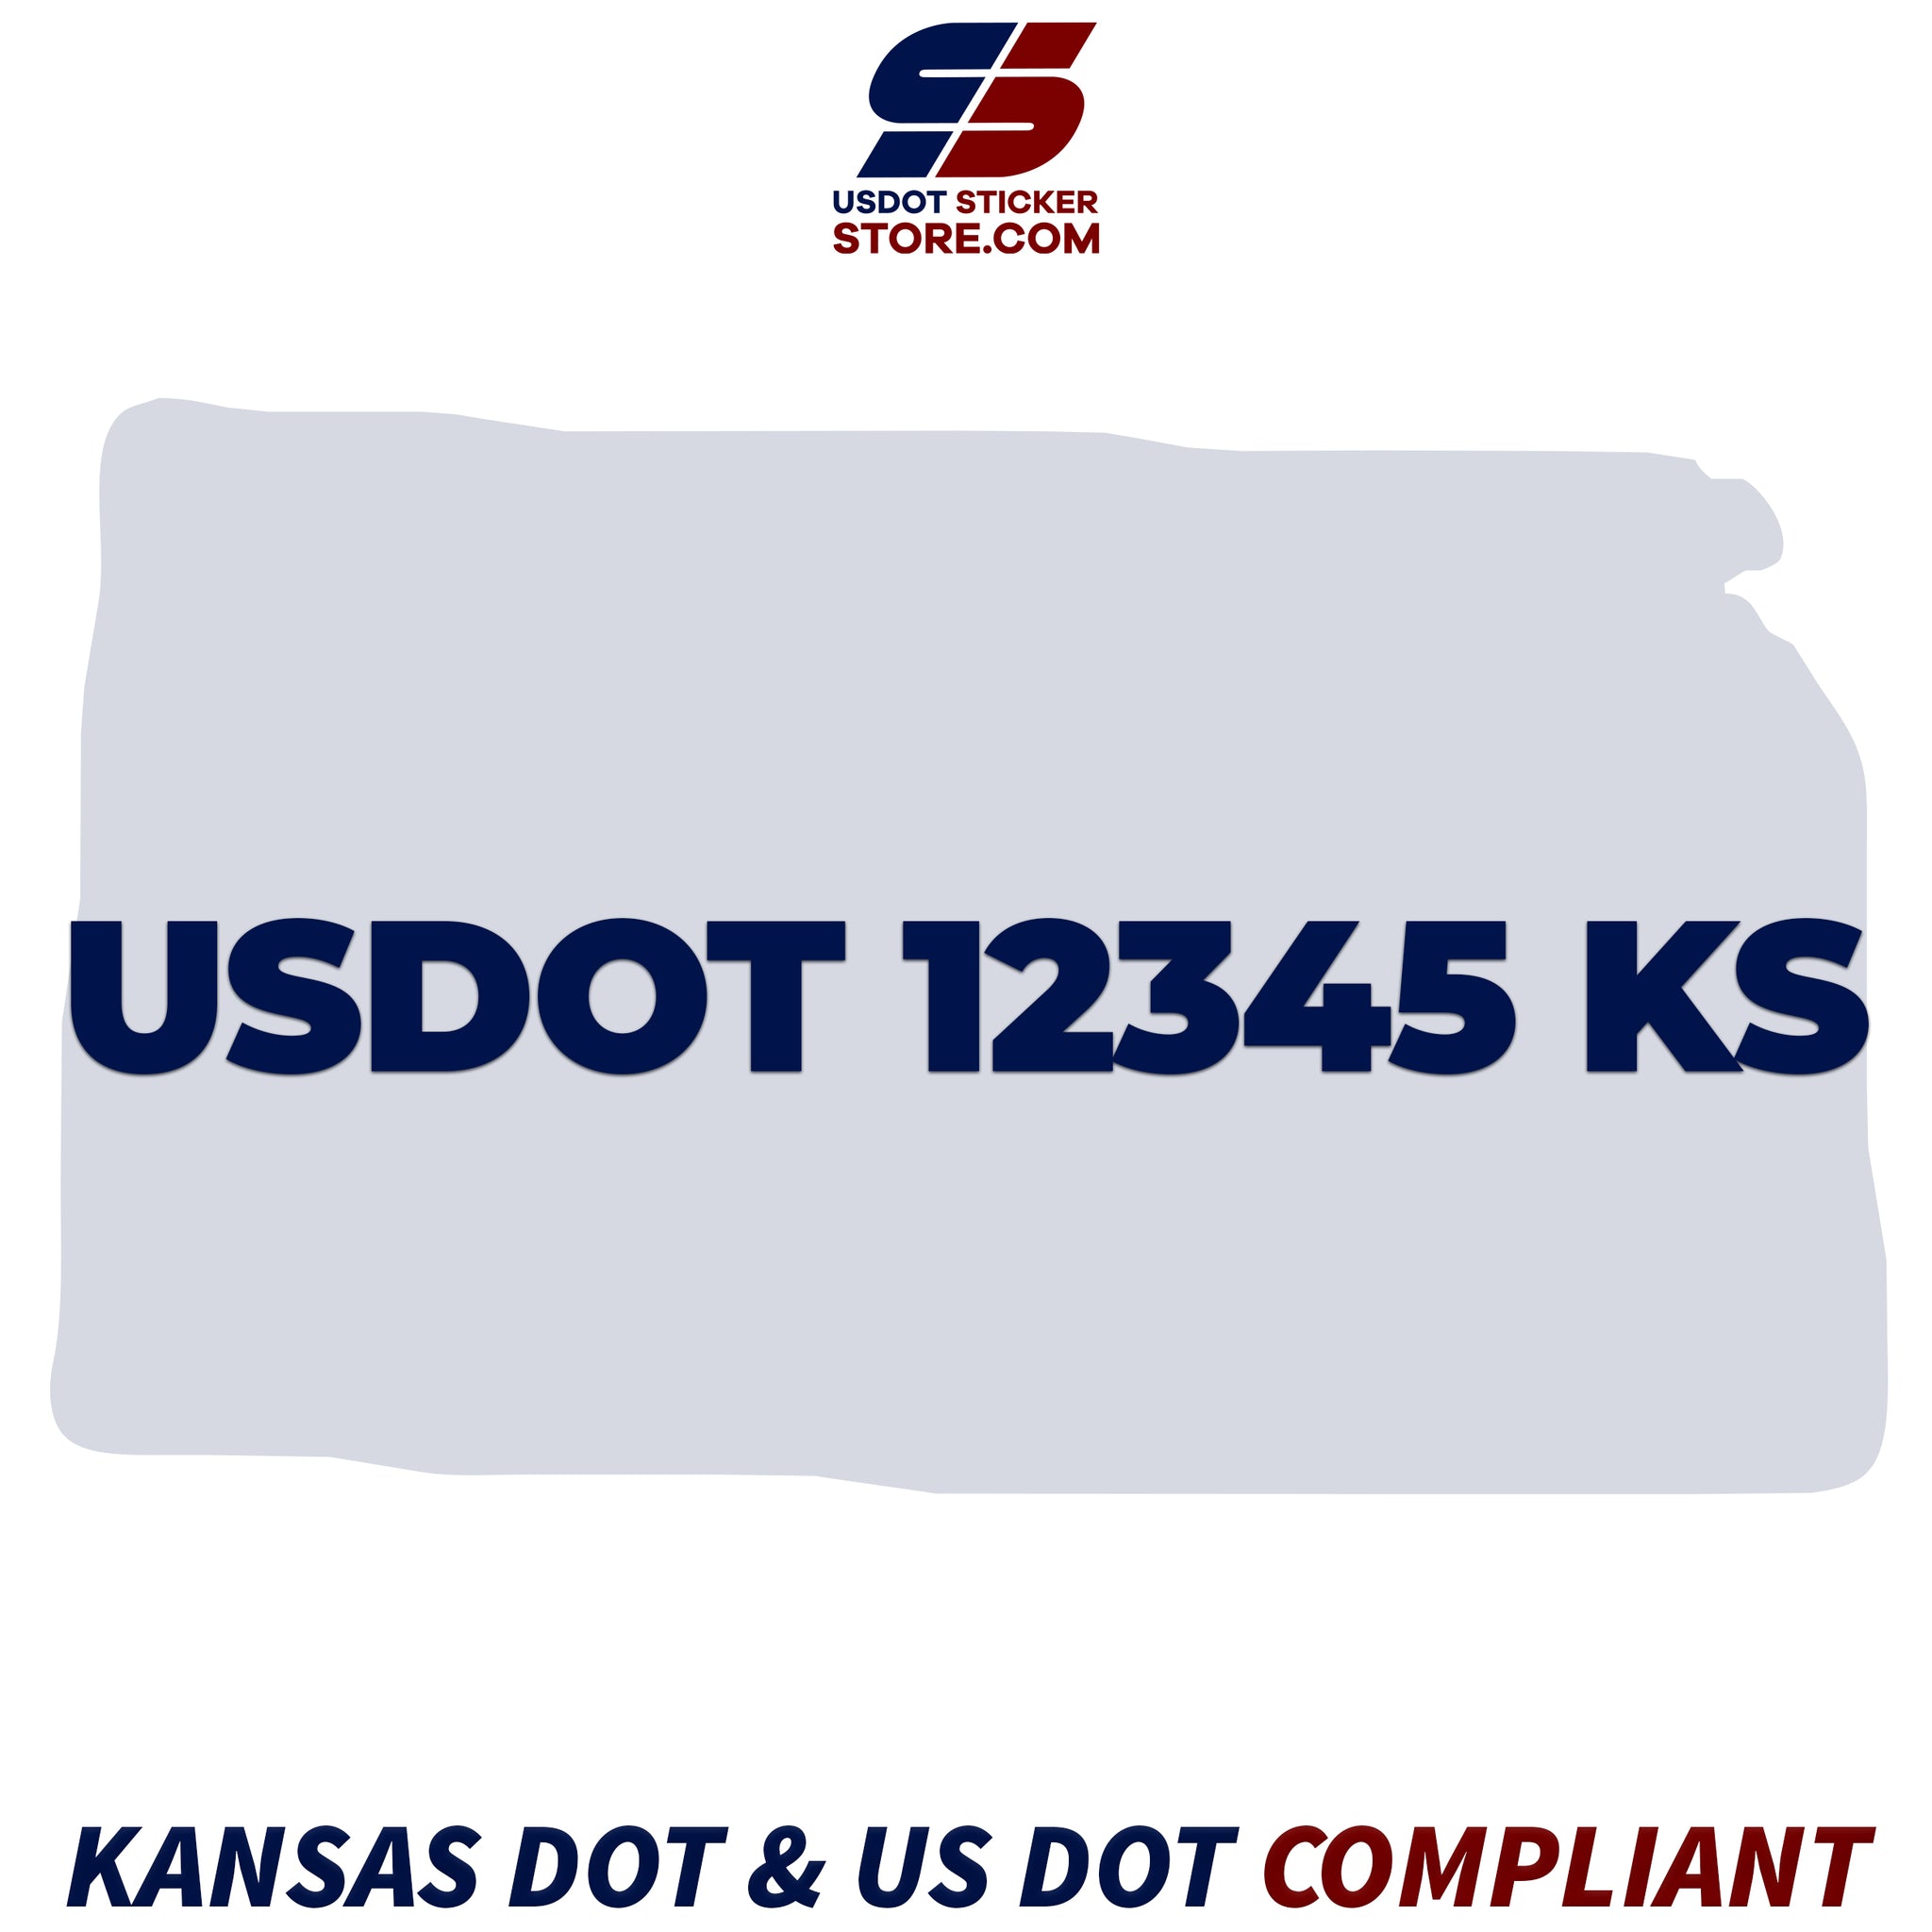 usdot sticker Kansas